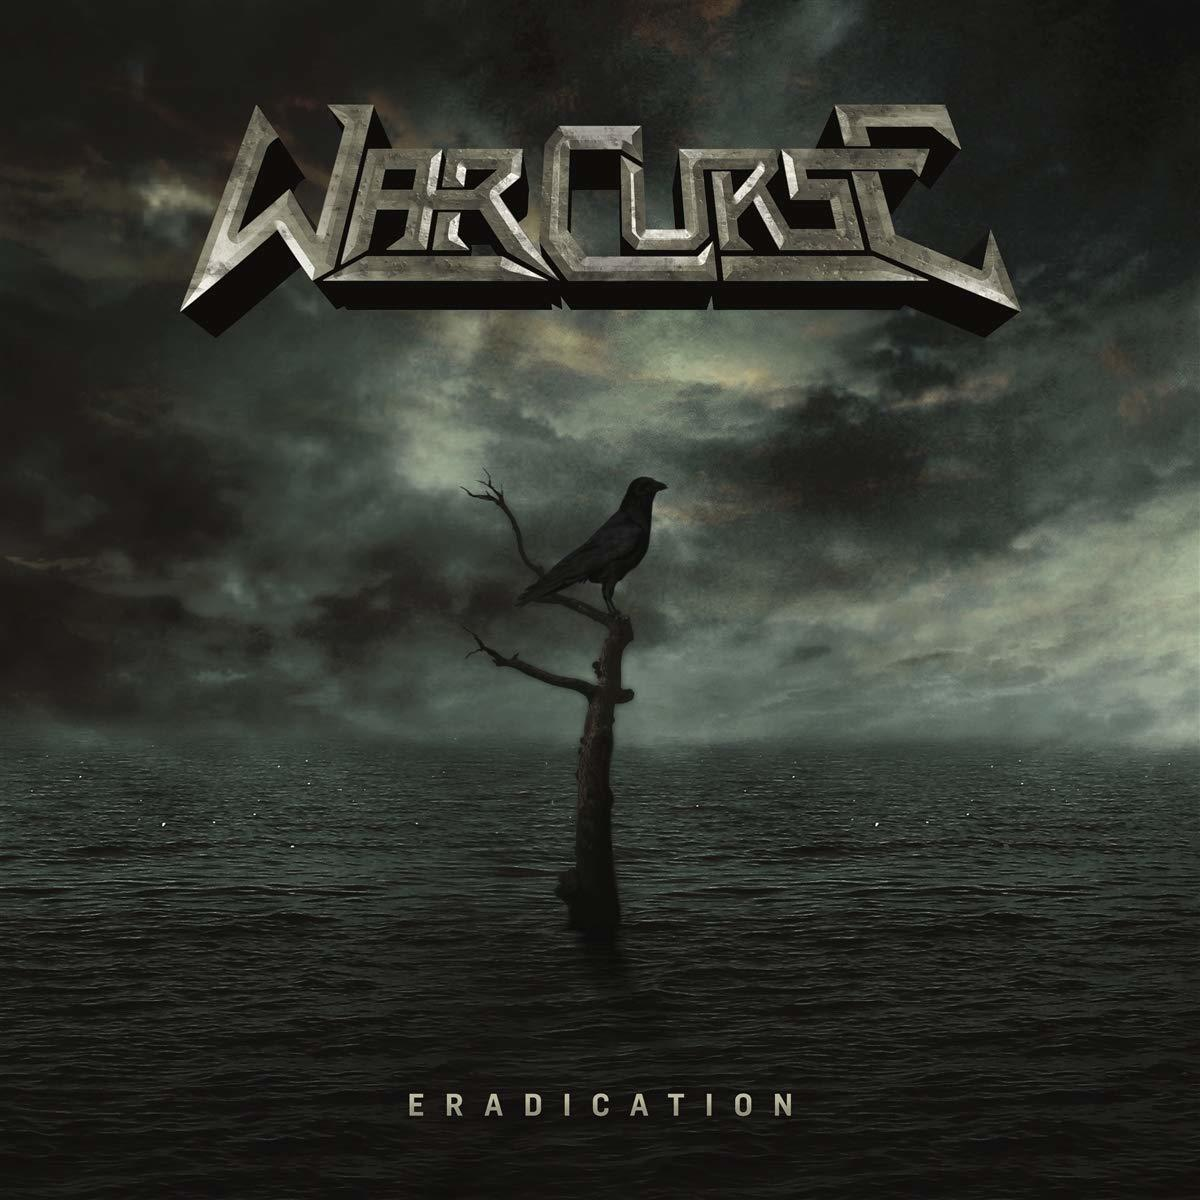 War Curse (Vinyl) - - Eradication (White)